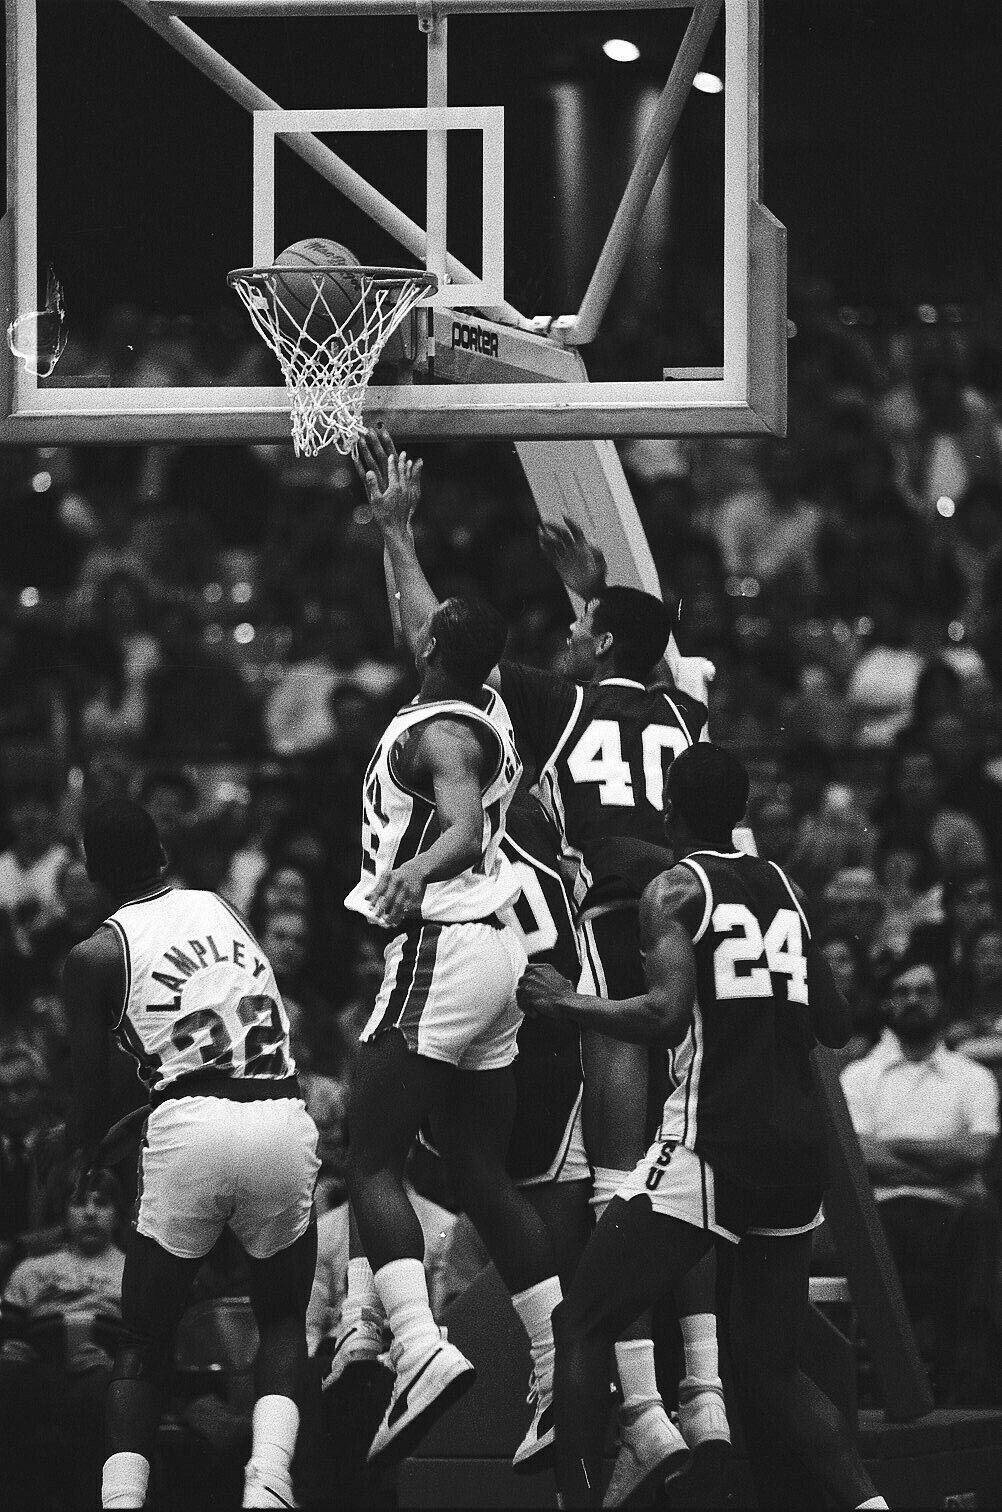 LD125-4 1986 DePaul Cleveland St College Basketball (62) ORIG 35mm B&W NEGATIVES Без бренда - фотография #9